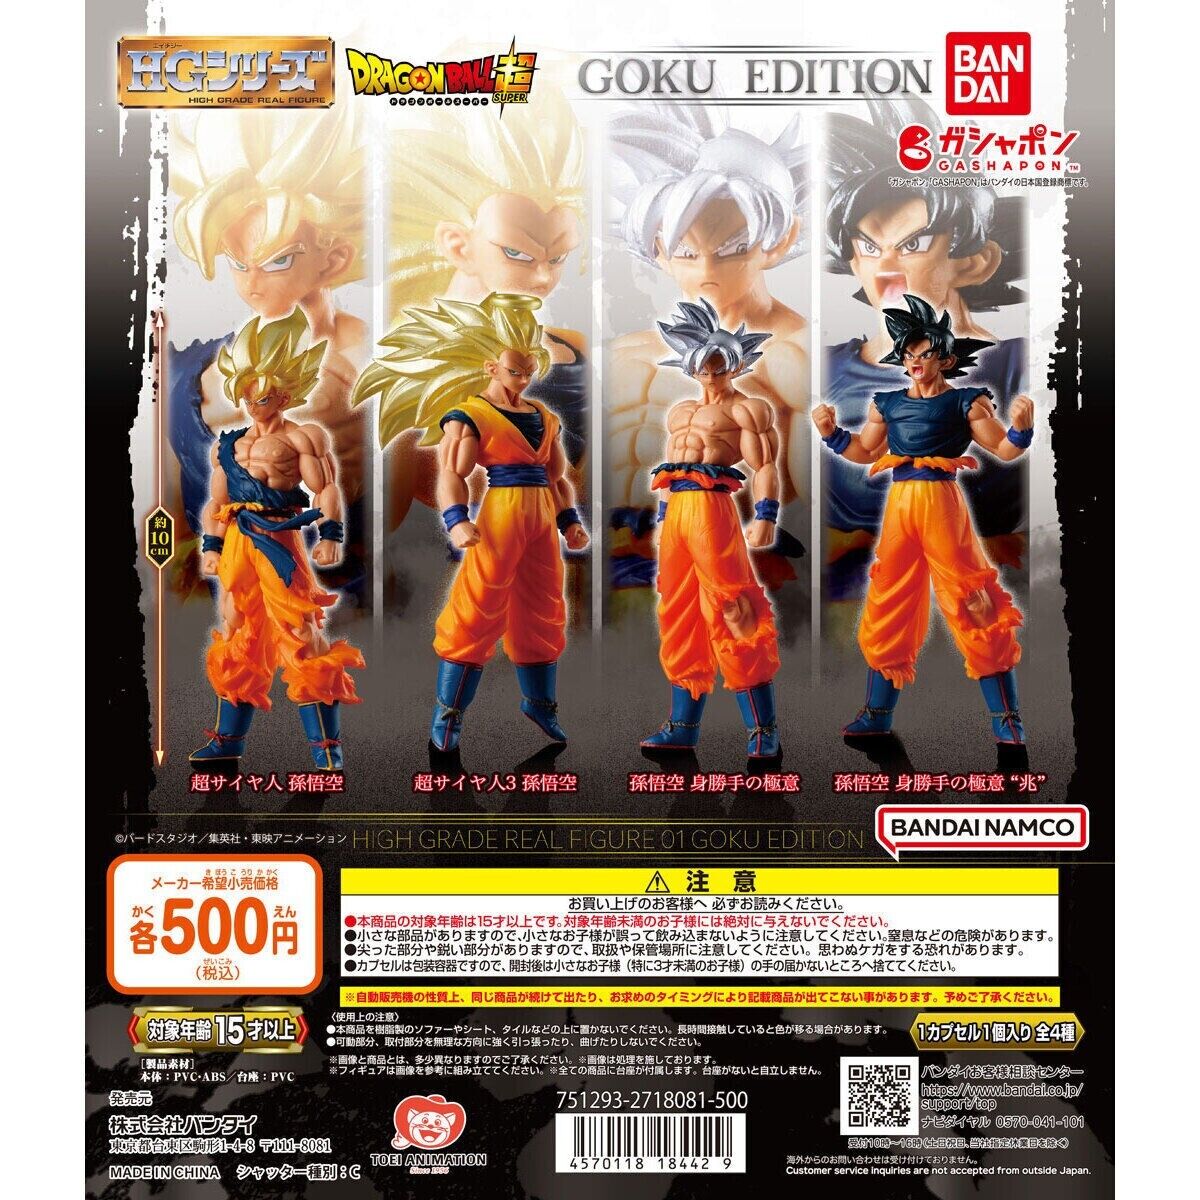 PSL HG Dragon Ball 01 GOKU EDITION set of 4PCS Bandai Gashapon Figure Japan